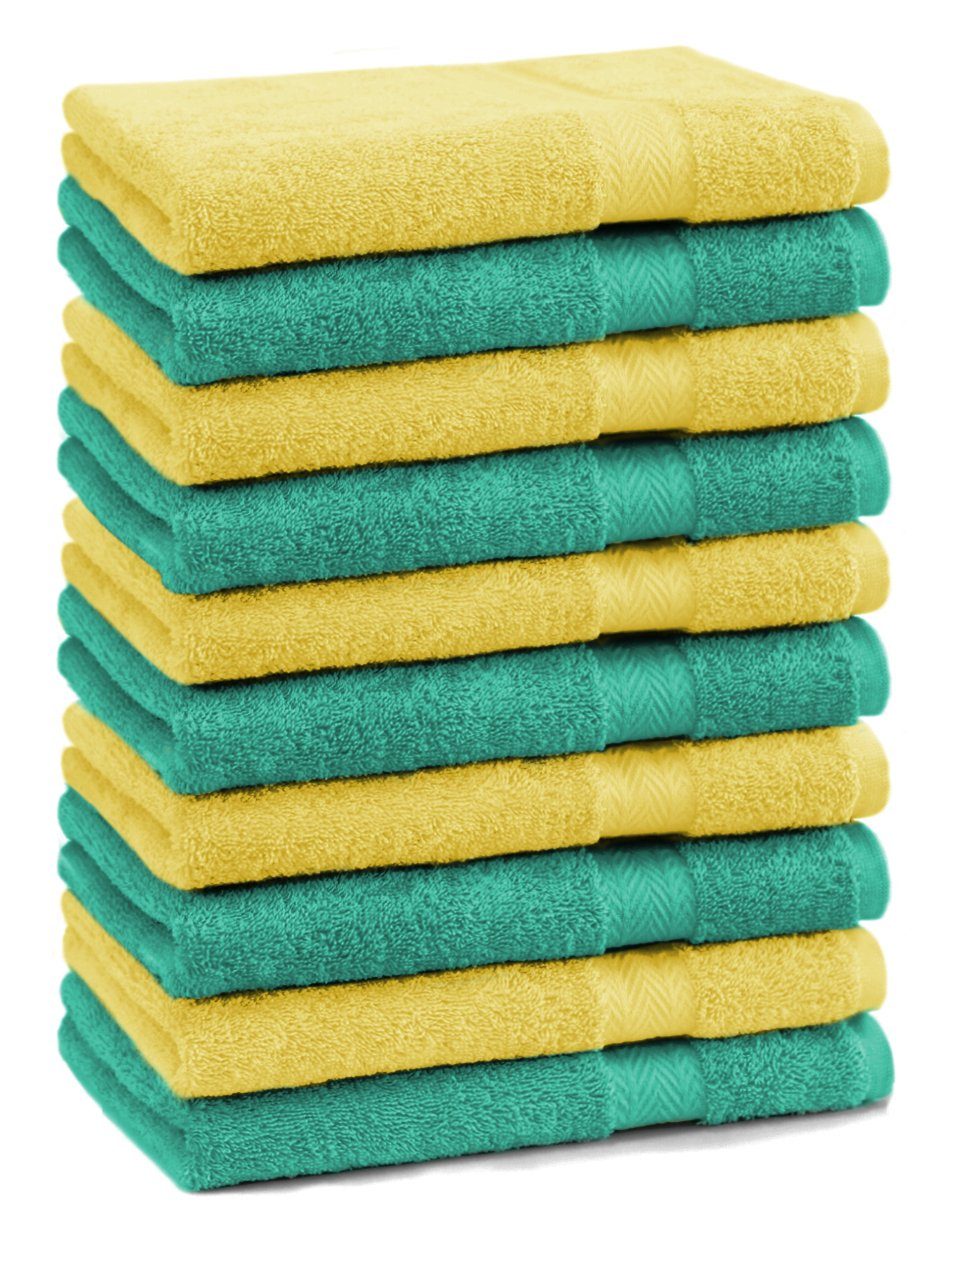 Betz Seiftuch 10 Stück Seiftücher Premium Farbe smaragdgrün und gelb | Seiftücher